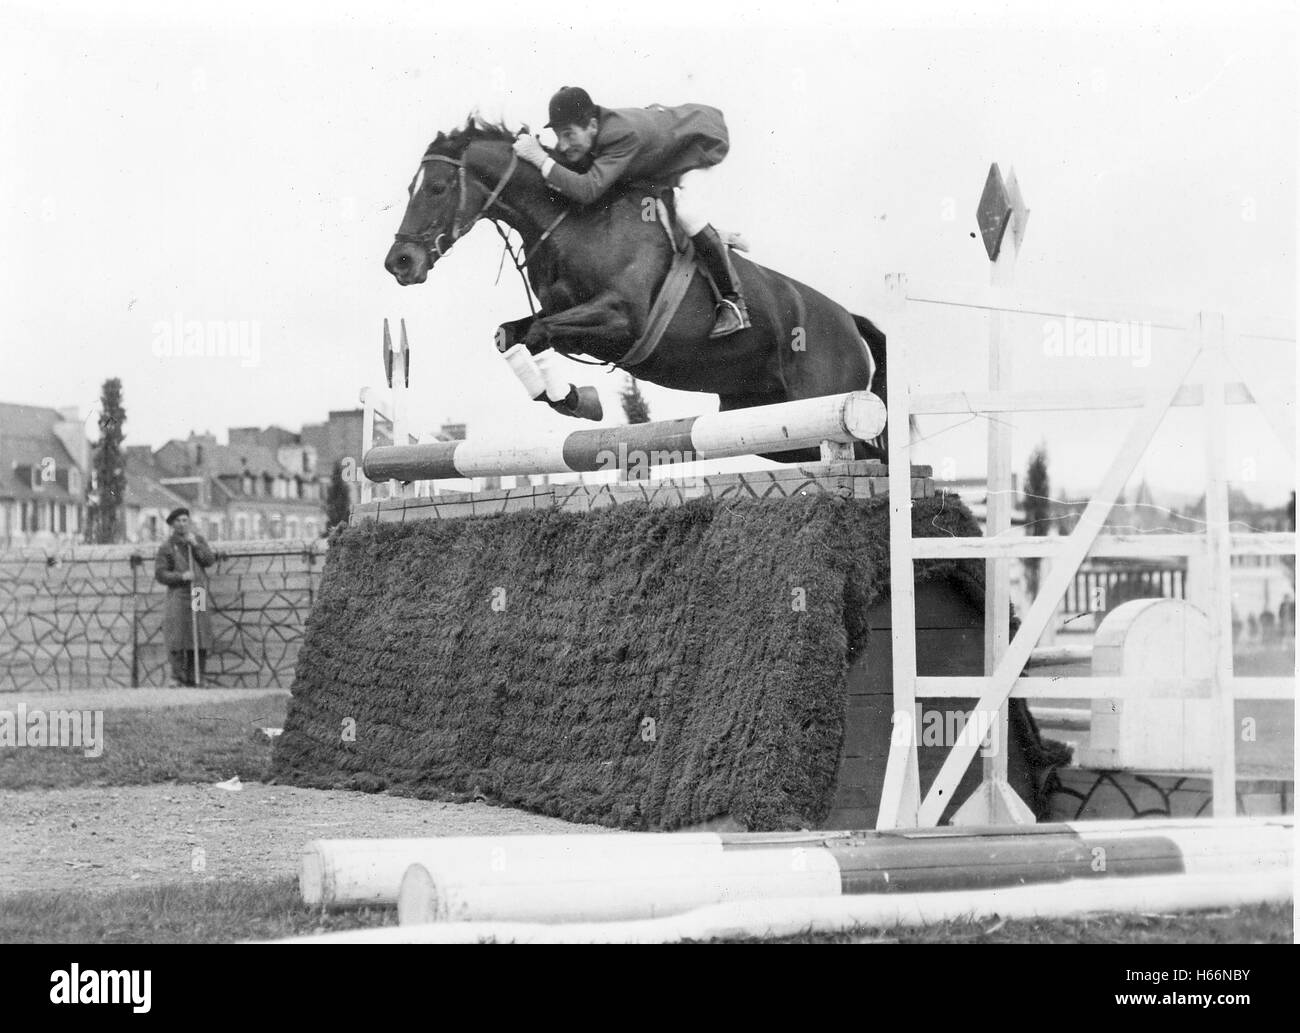 Pau 1956 Pierre Jonqueres d'Oriola, France, riding Guele d'Or Stock Photo